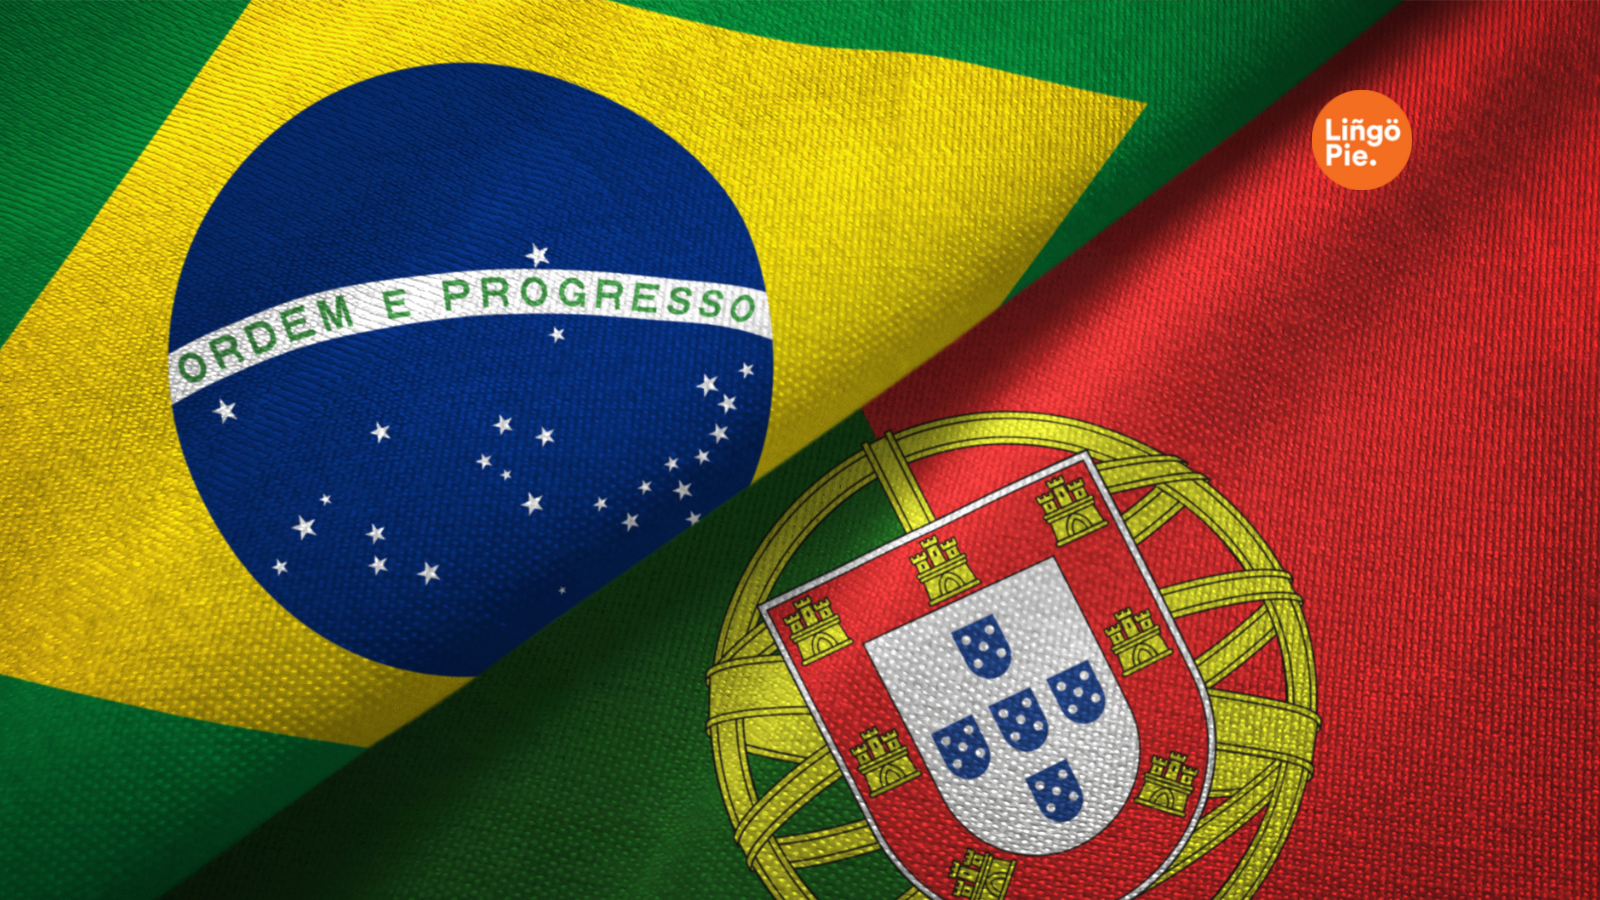 Brazilian Portuguese флаг. Португалия Бразилия 2002. Португальский язык в Бразилии. Флаг Бразилии фото.